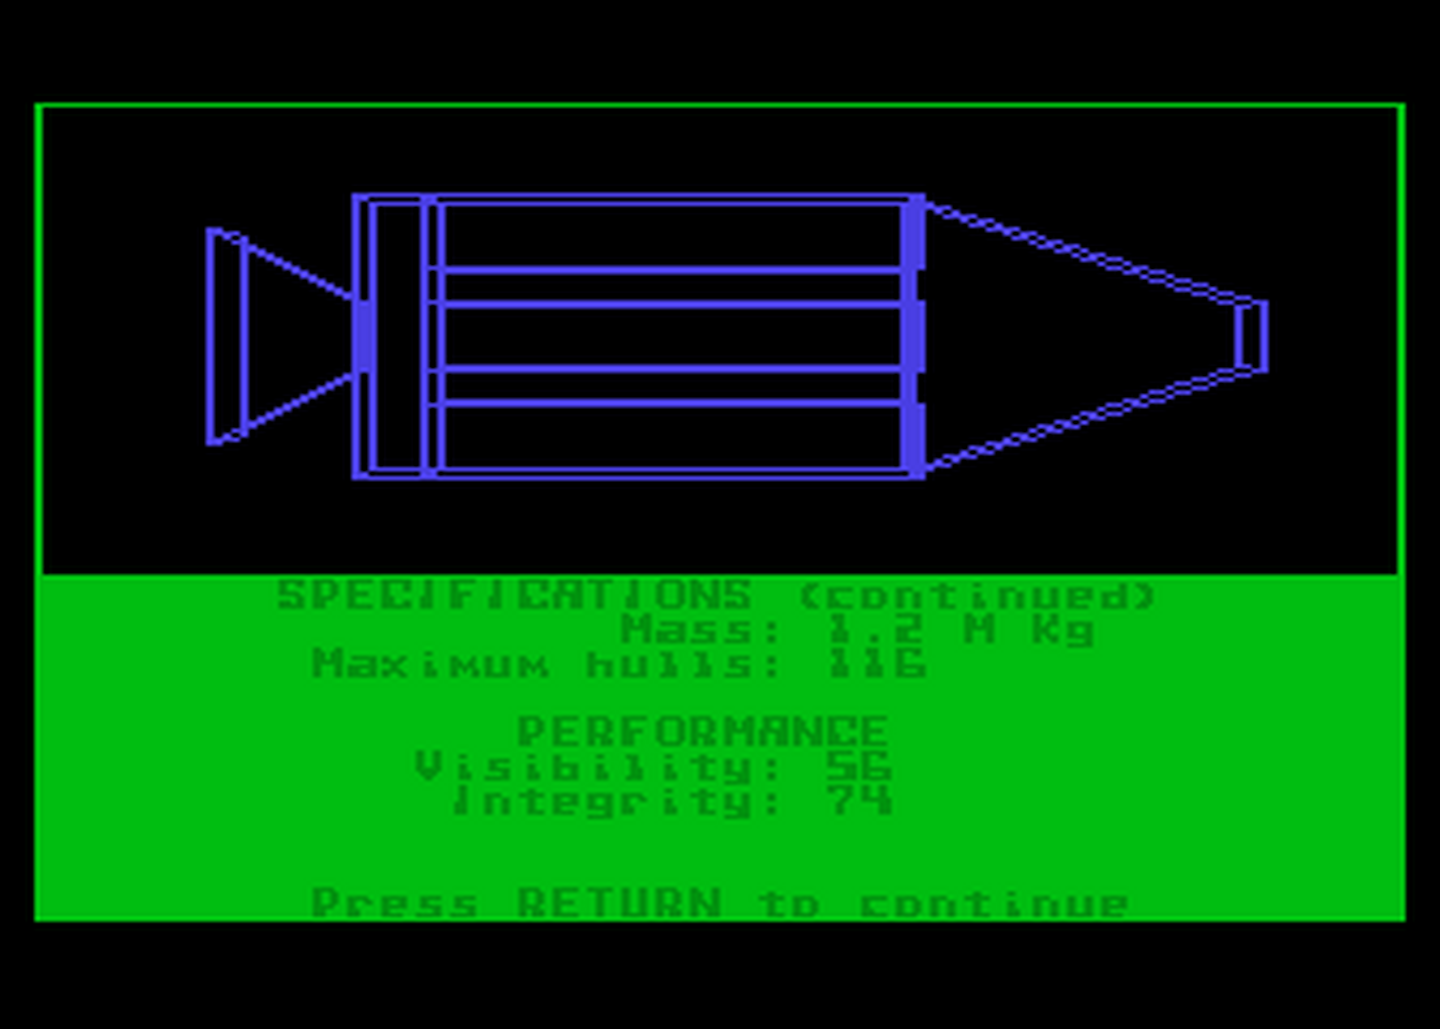 Atari GameBase Universe Omnitrend_Software 1984